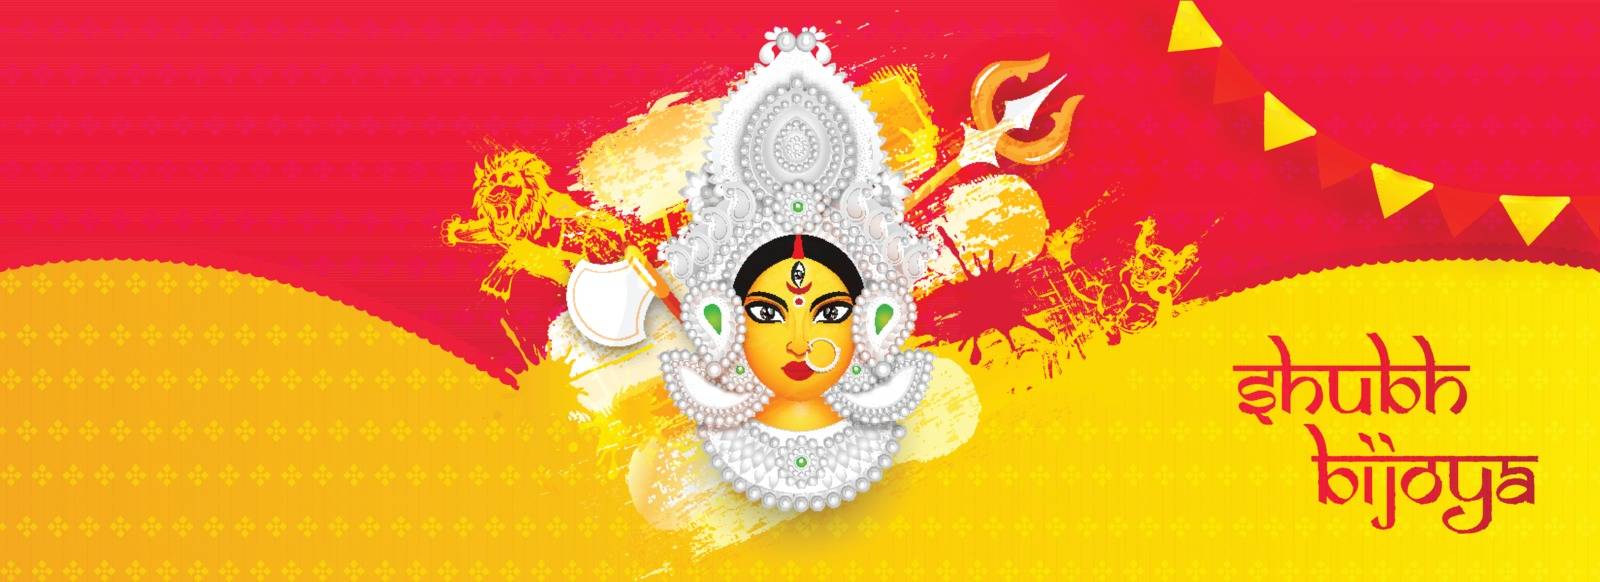 Creative header or banner design with illustration of Hindu Myth by aispl